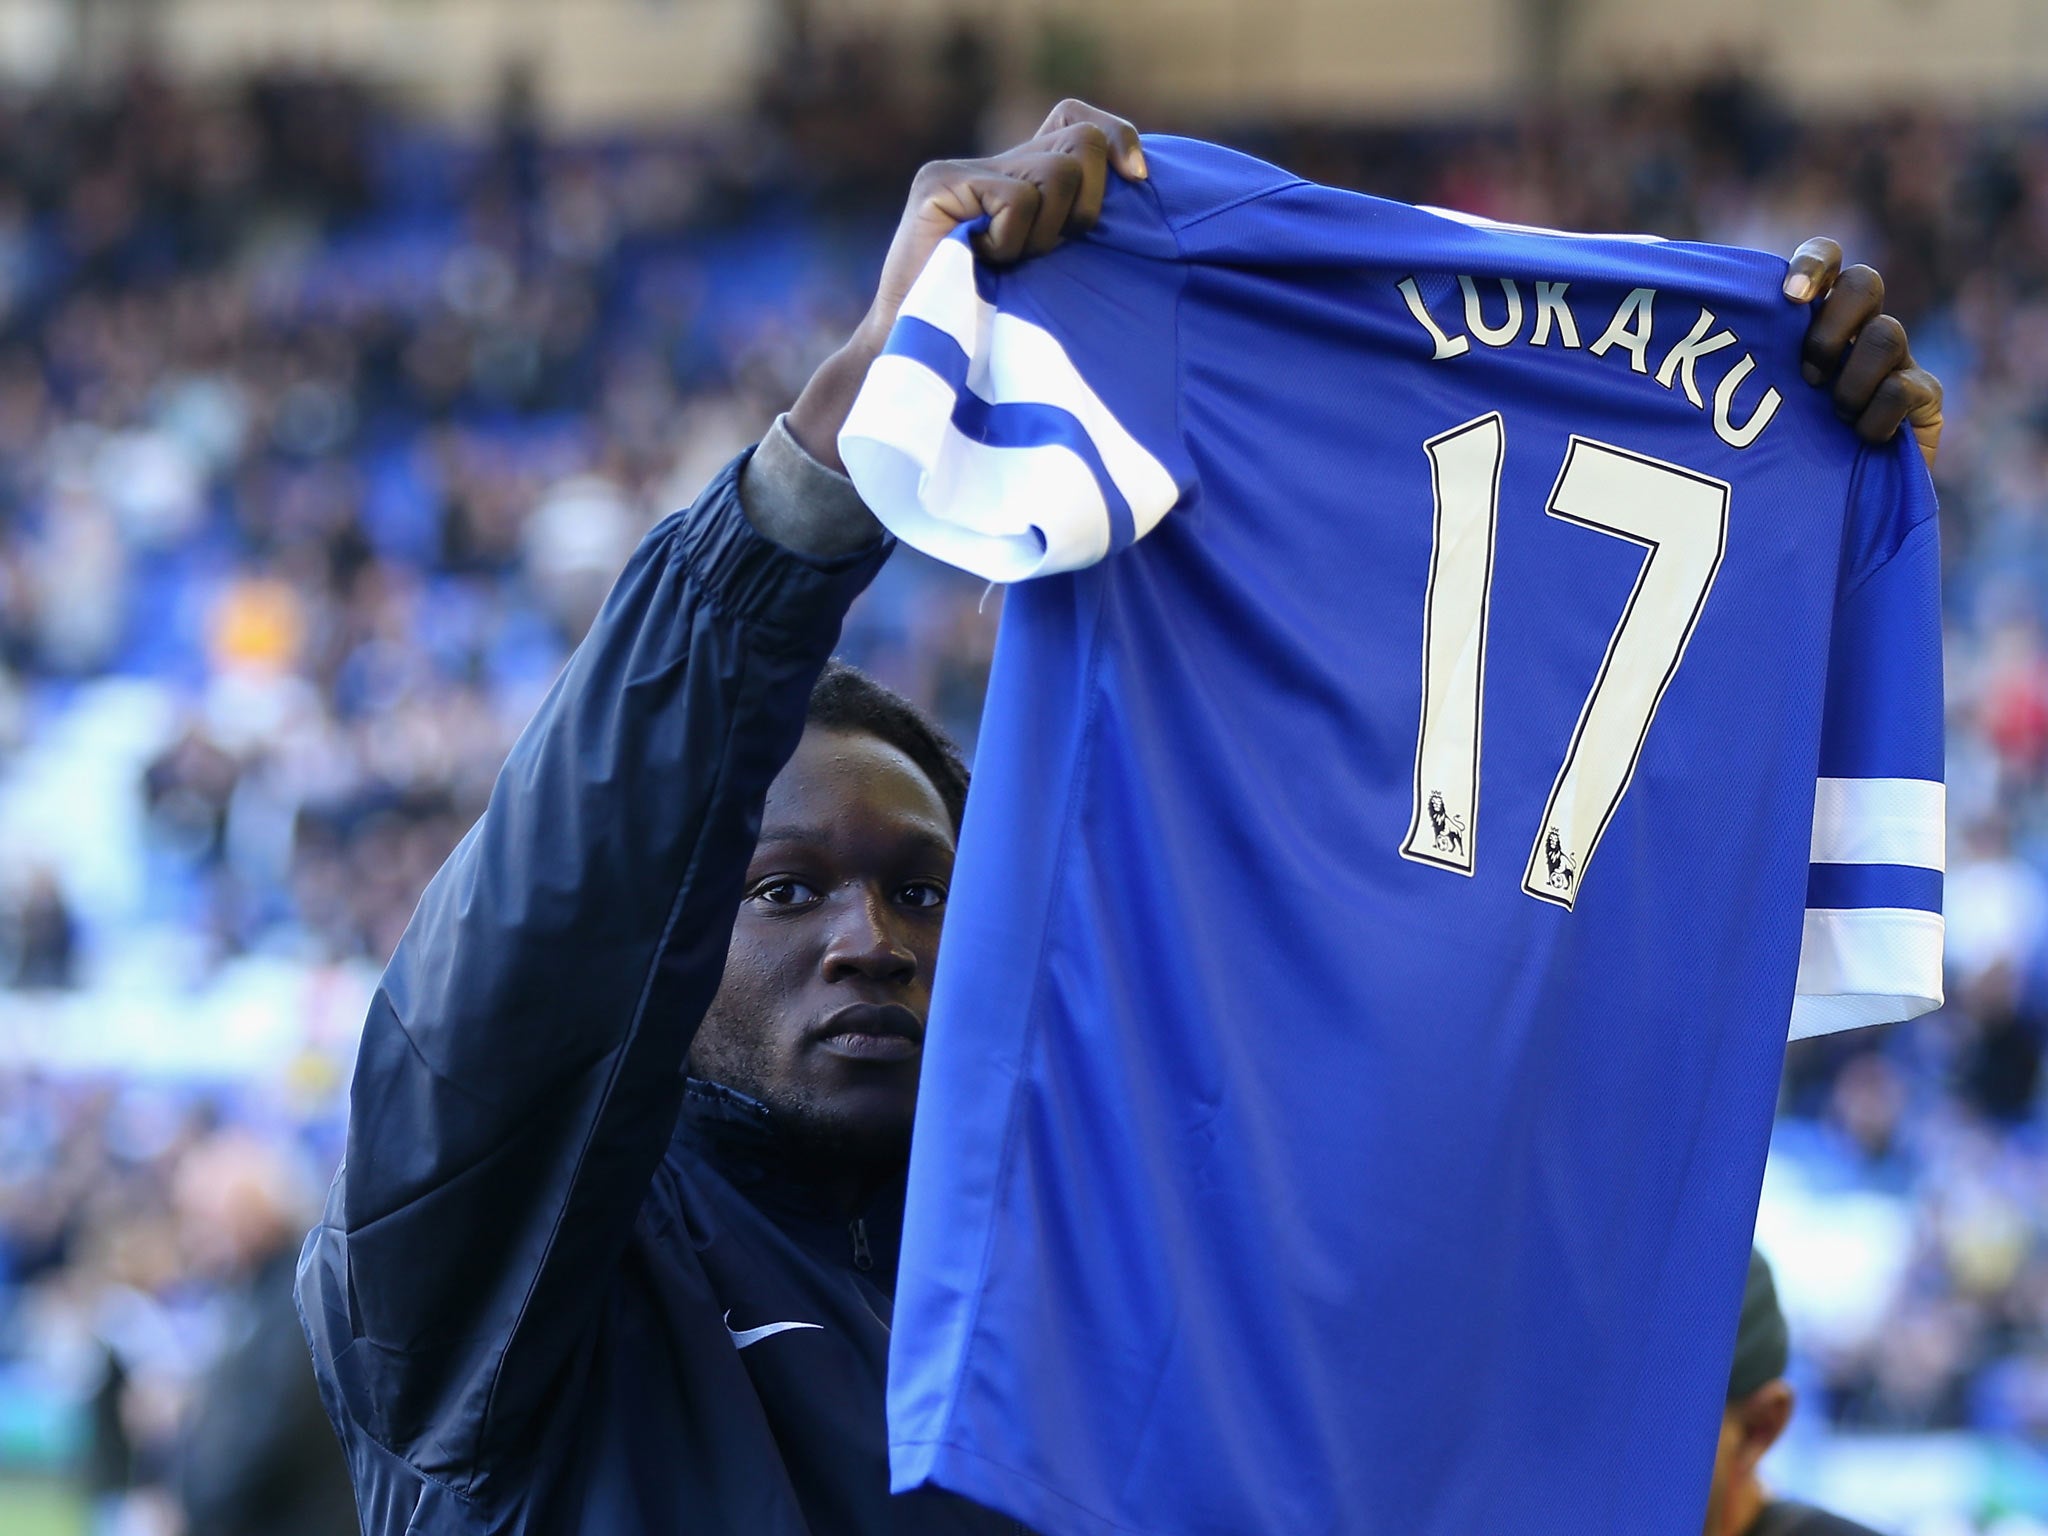 Romelu Lukaku could make his Everton debut today